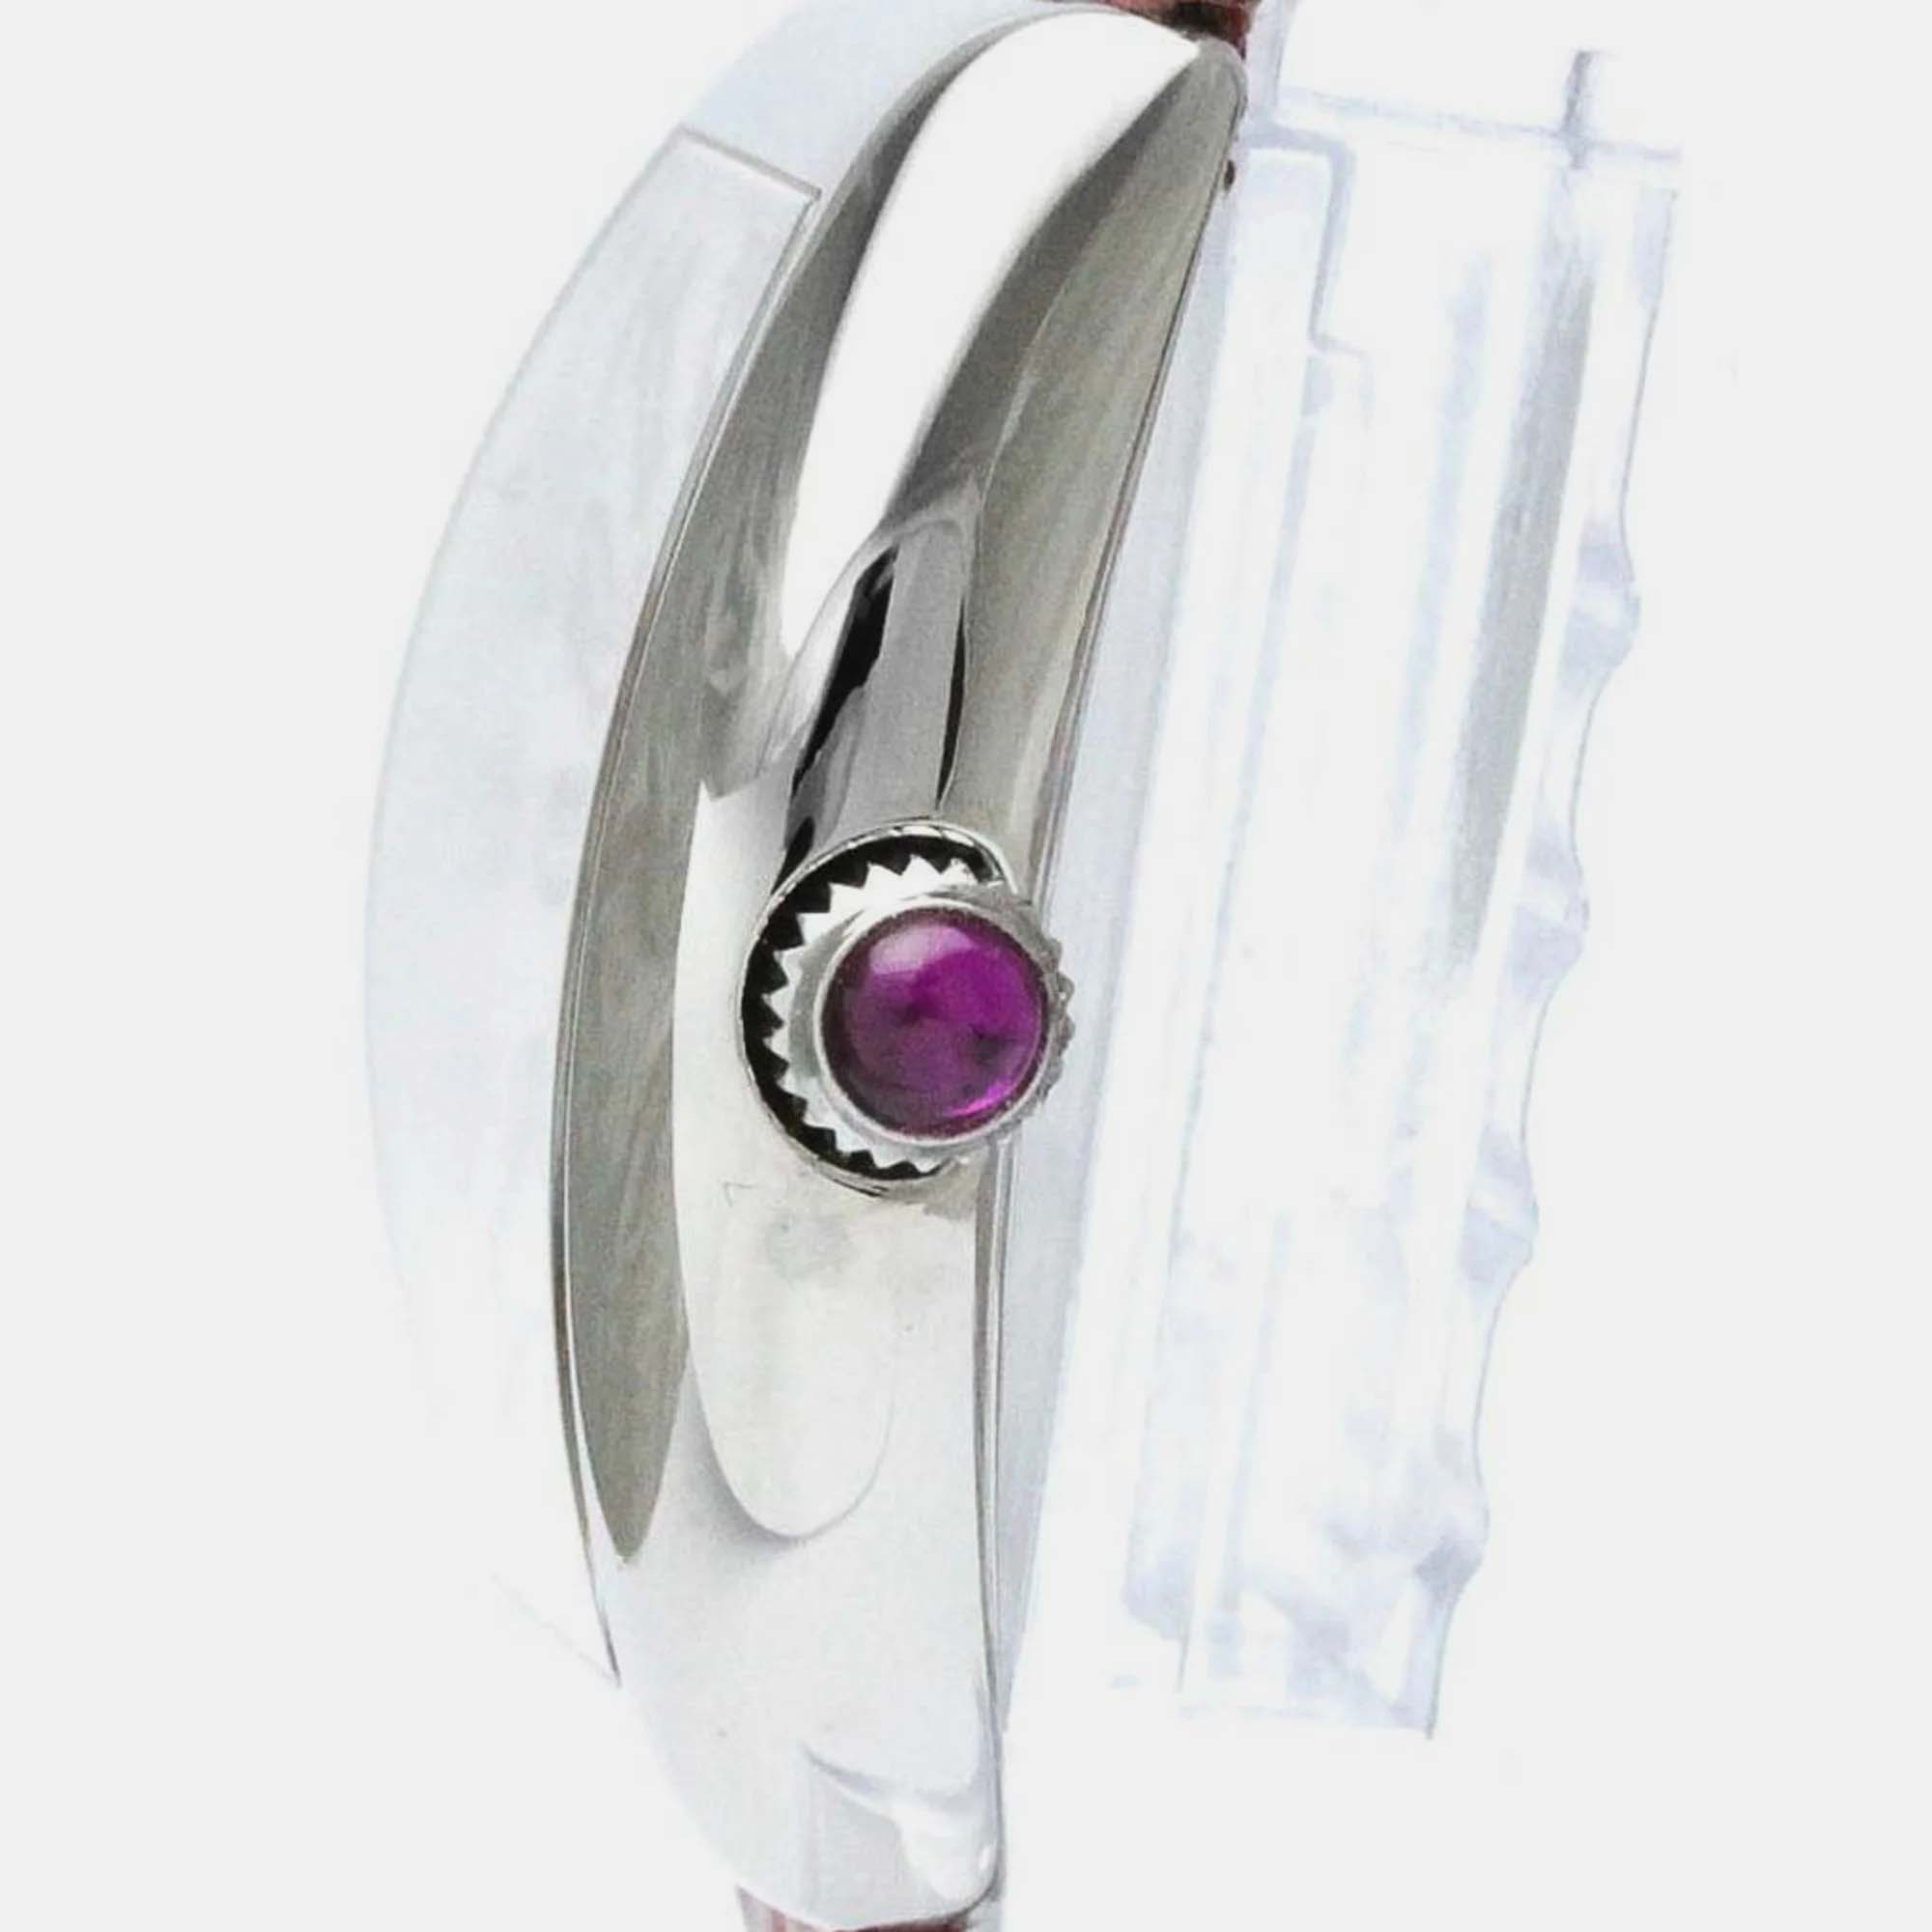 Franck Muller Silver Stainless Steel Heart To Heart 5002SQZJA Quartz Women's Wristwatch 26 Mm